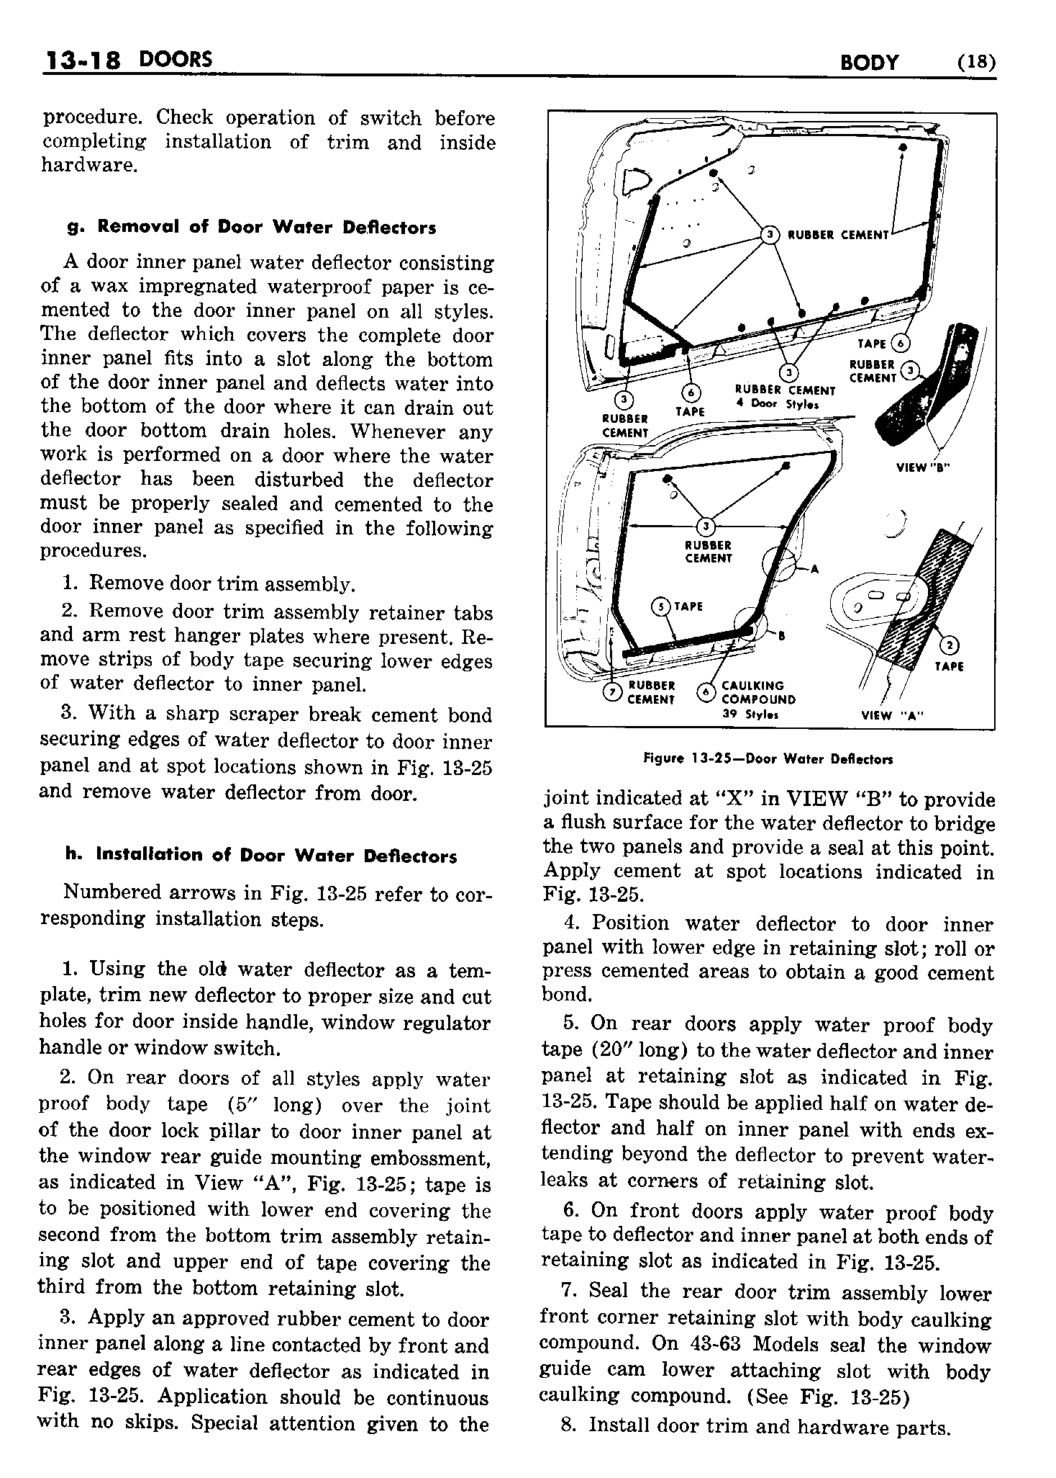 n_1958 Buick Body Service Manual-019-019.jpg